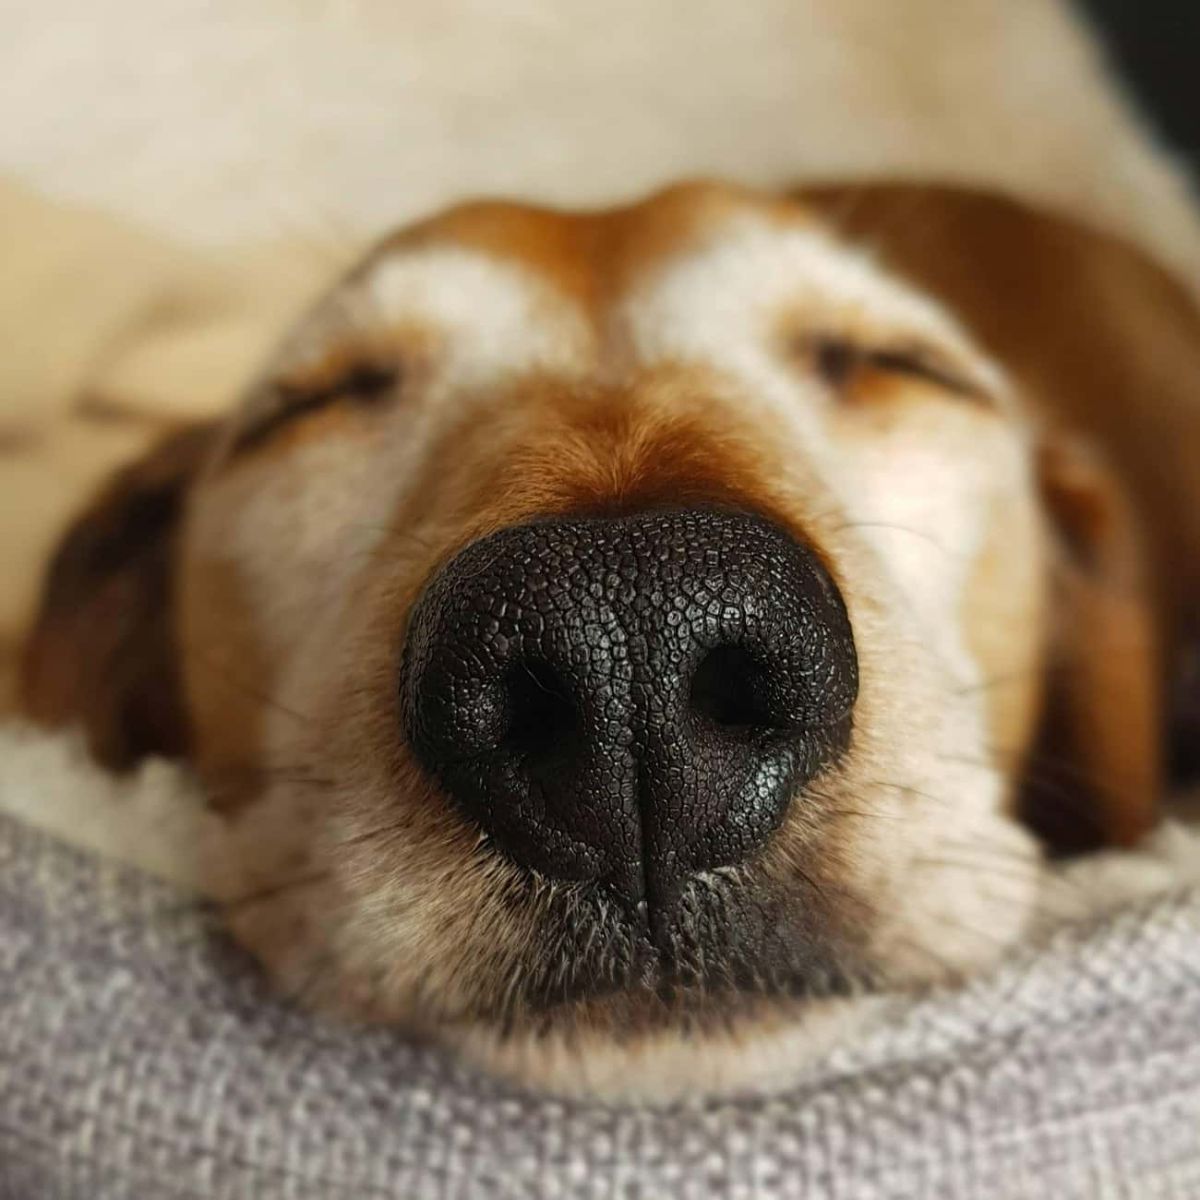 close up of sleeping brown dog's nose